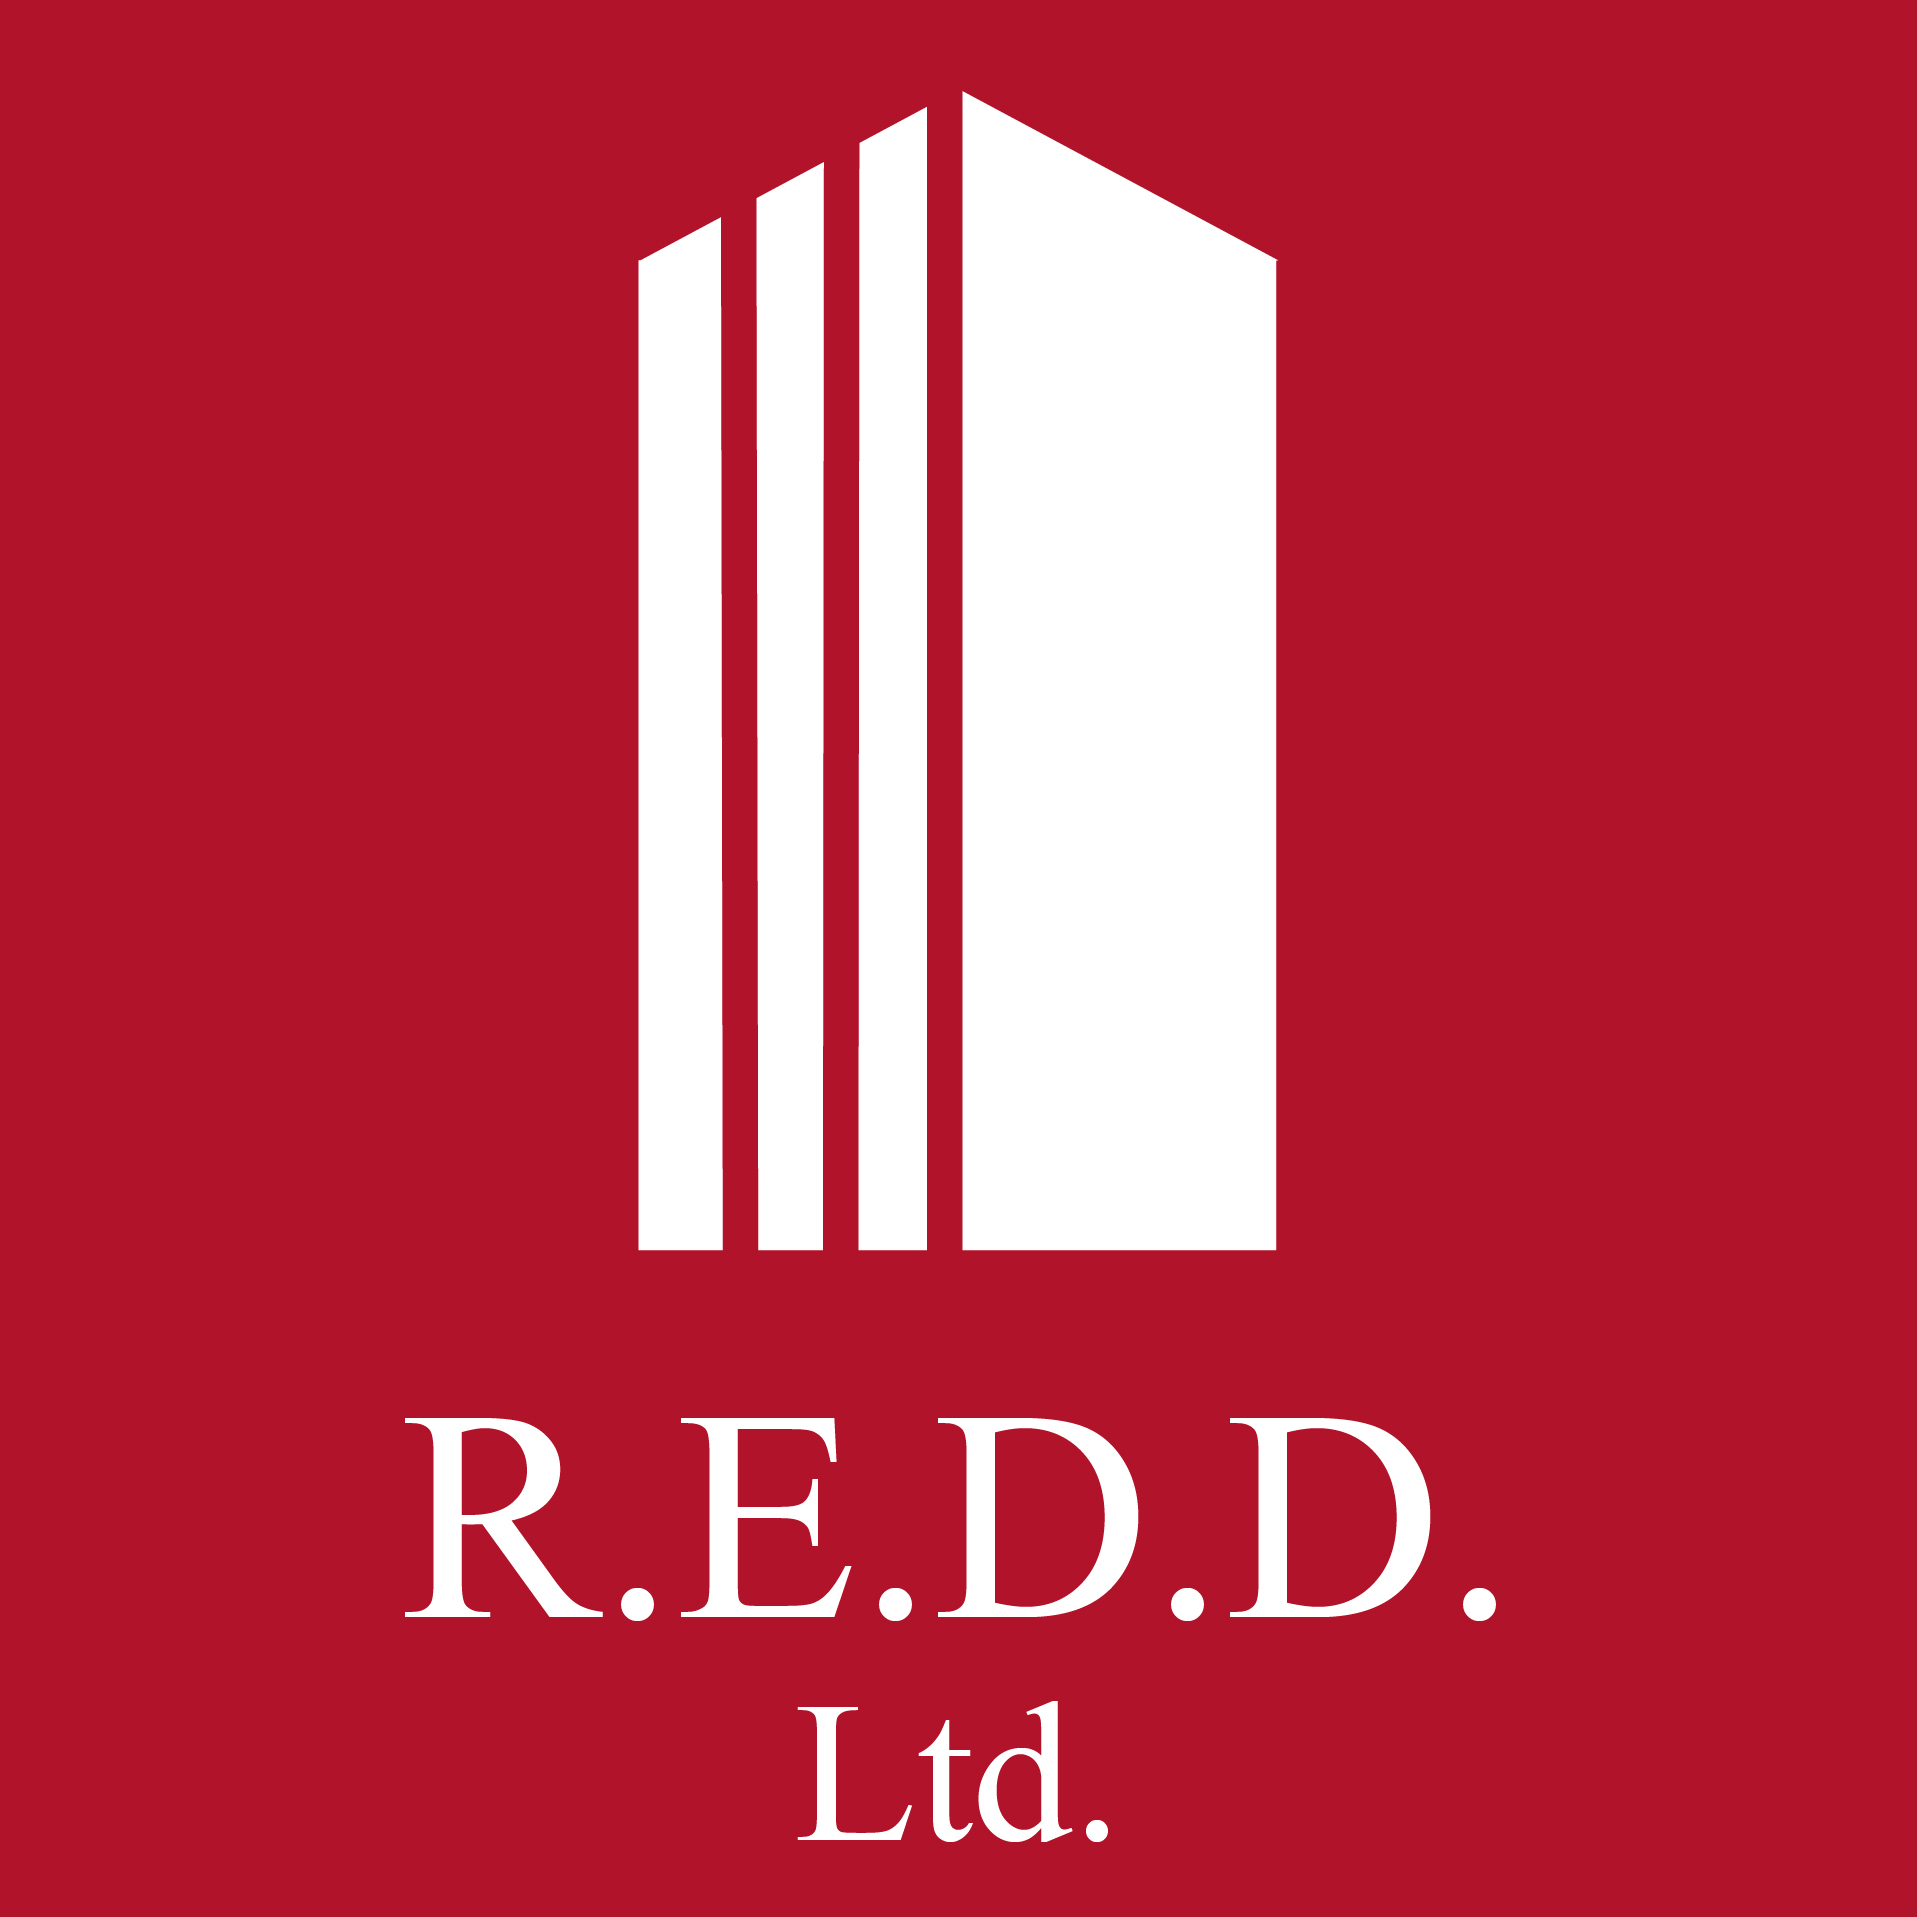 R.E.D.D. Real Estate Development Dynamics Ltd.